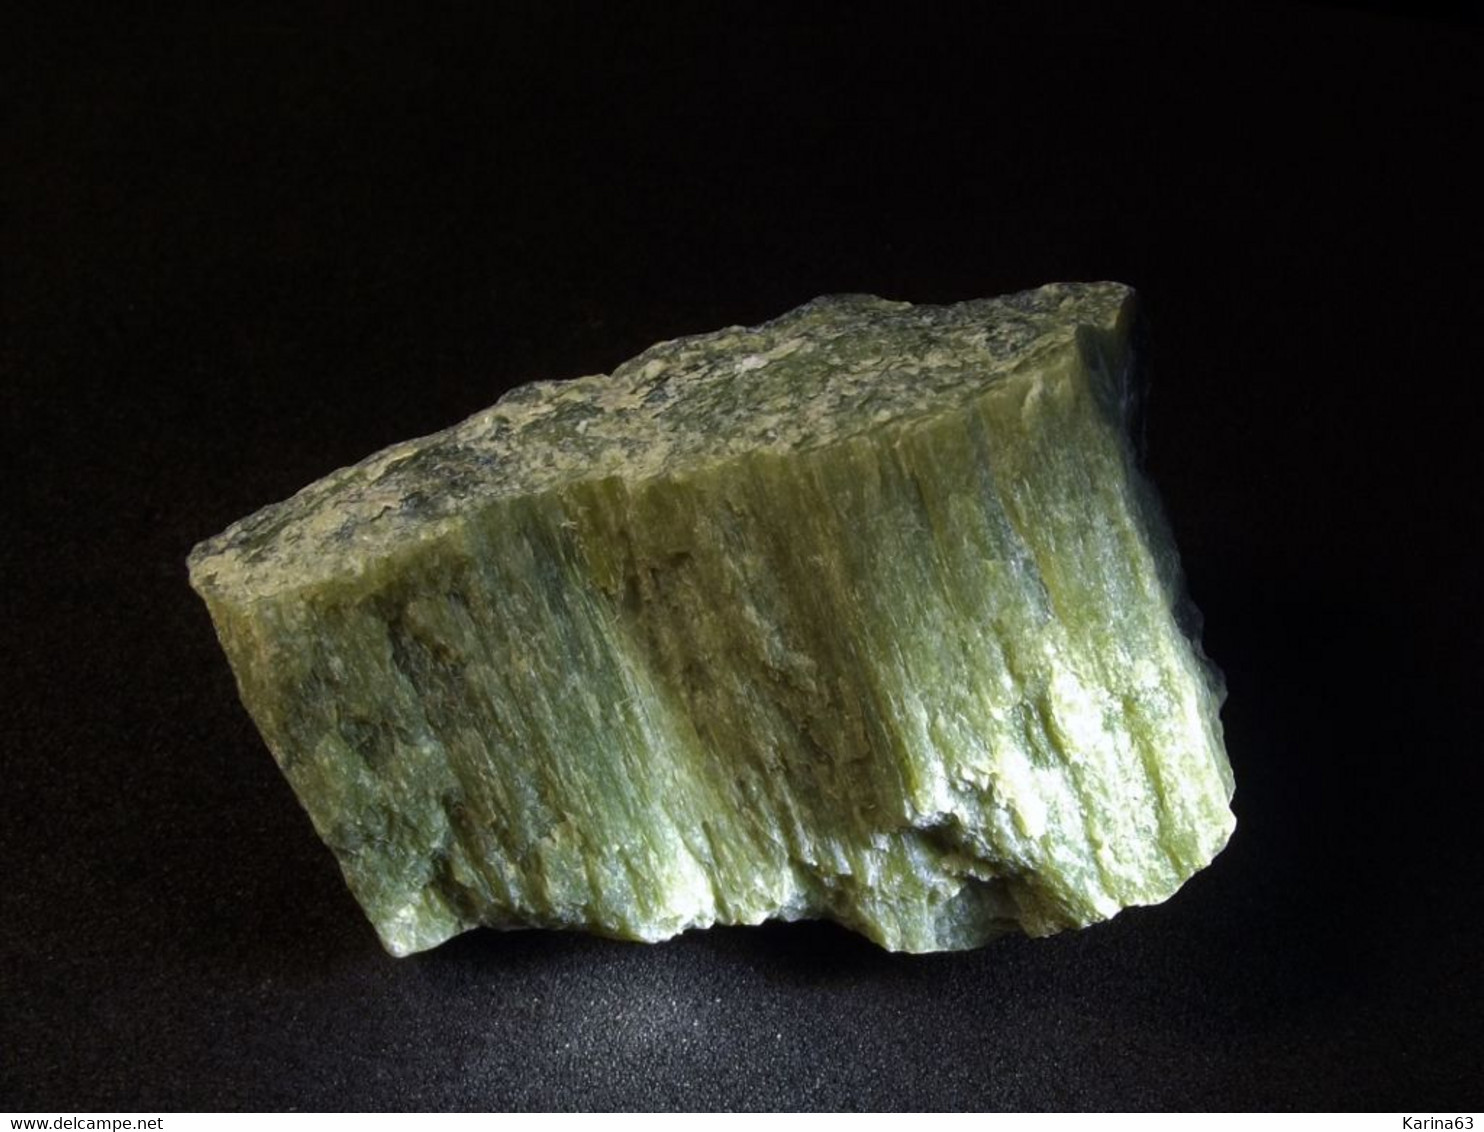 Antigorite - Serpentine Subgroup - ( 5 X 3 X 1.5 Cm ) - Vencorène - Nus - Val D' Aosta - Italy - Minéraux